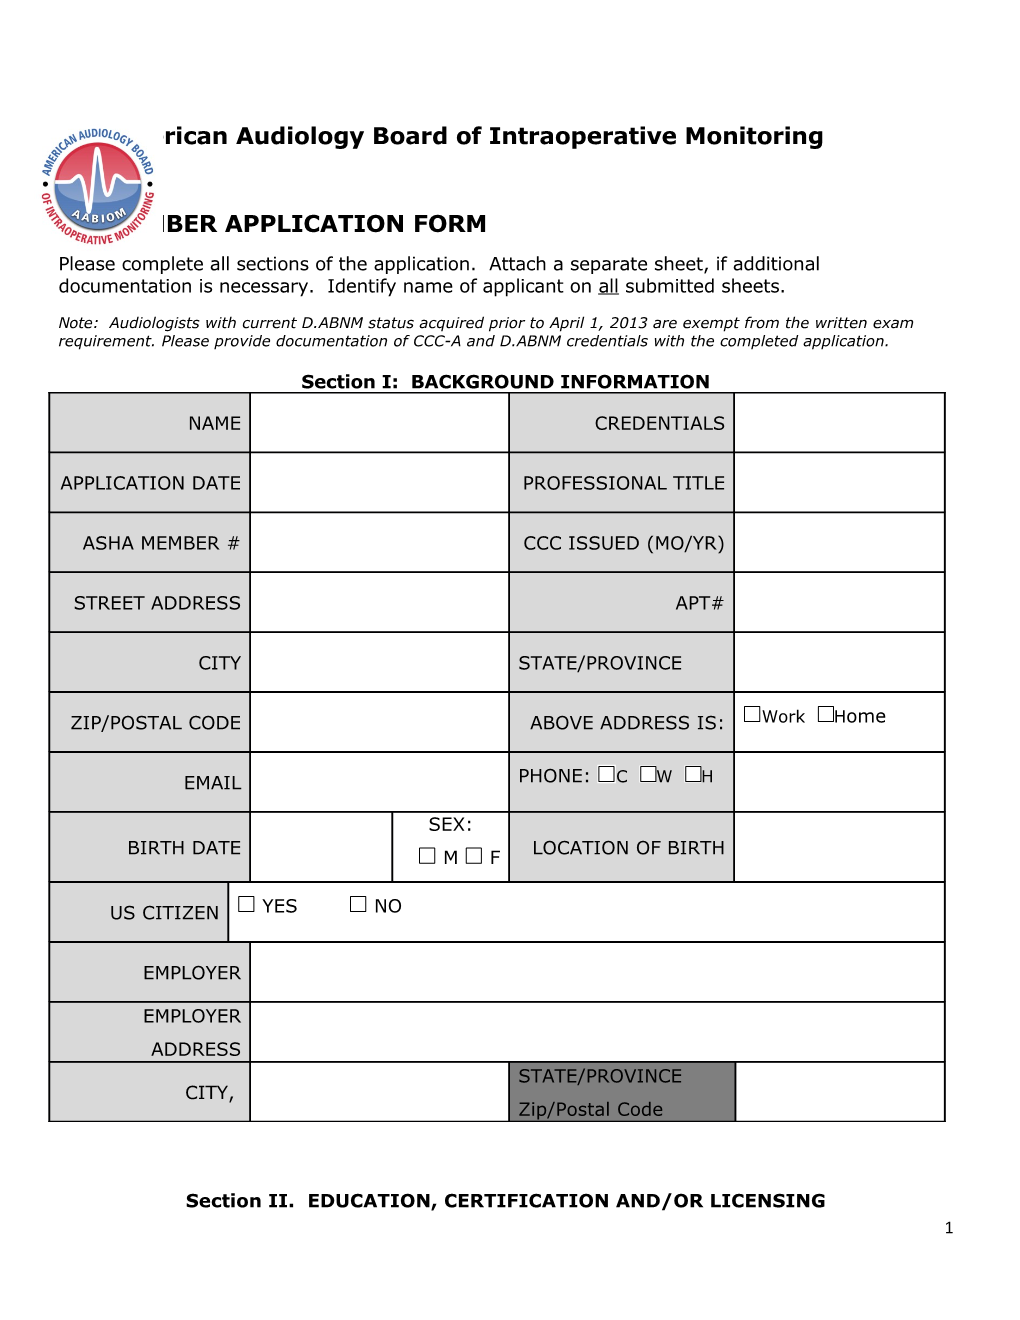 Member Application Form